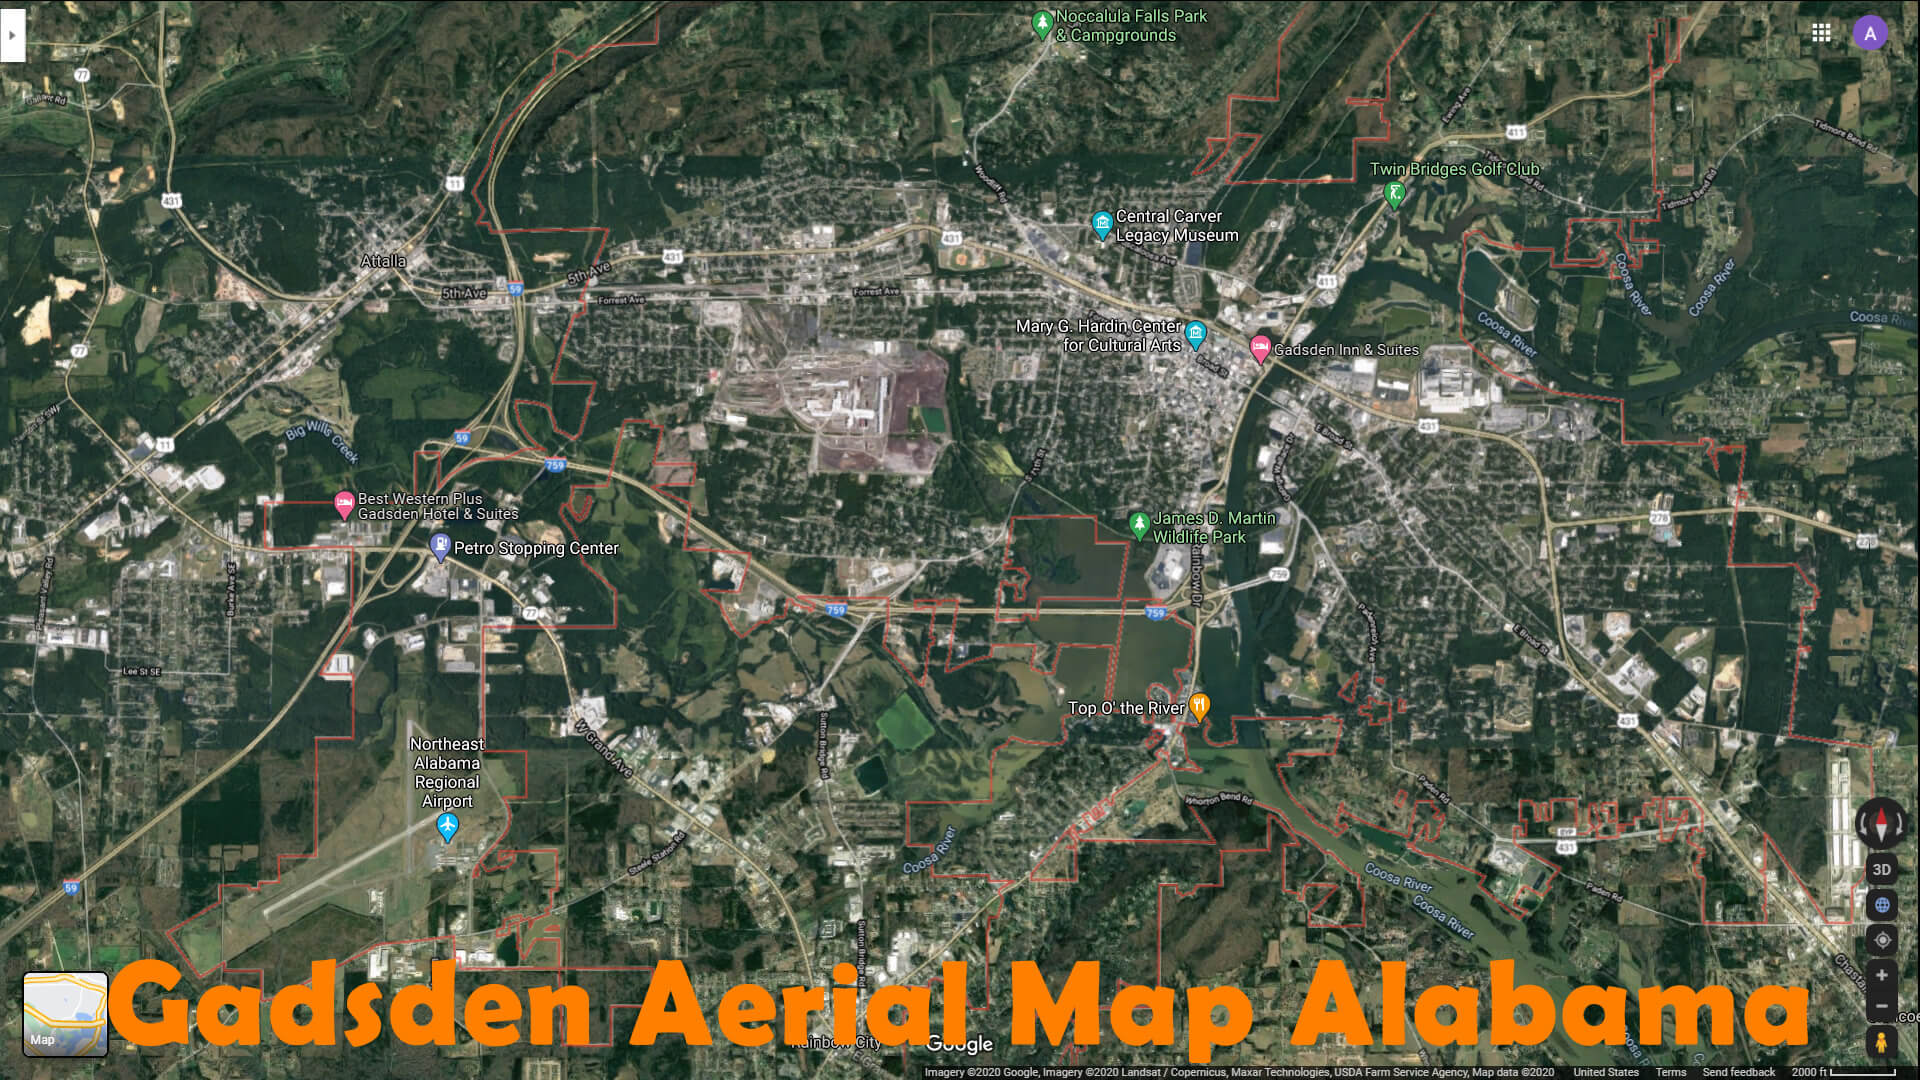 Gadsden Aerial Map Alabama